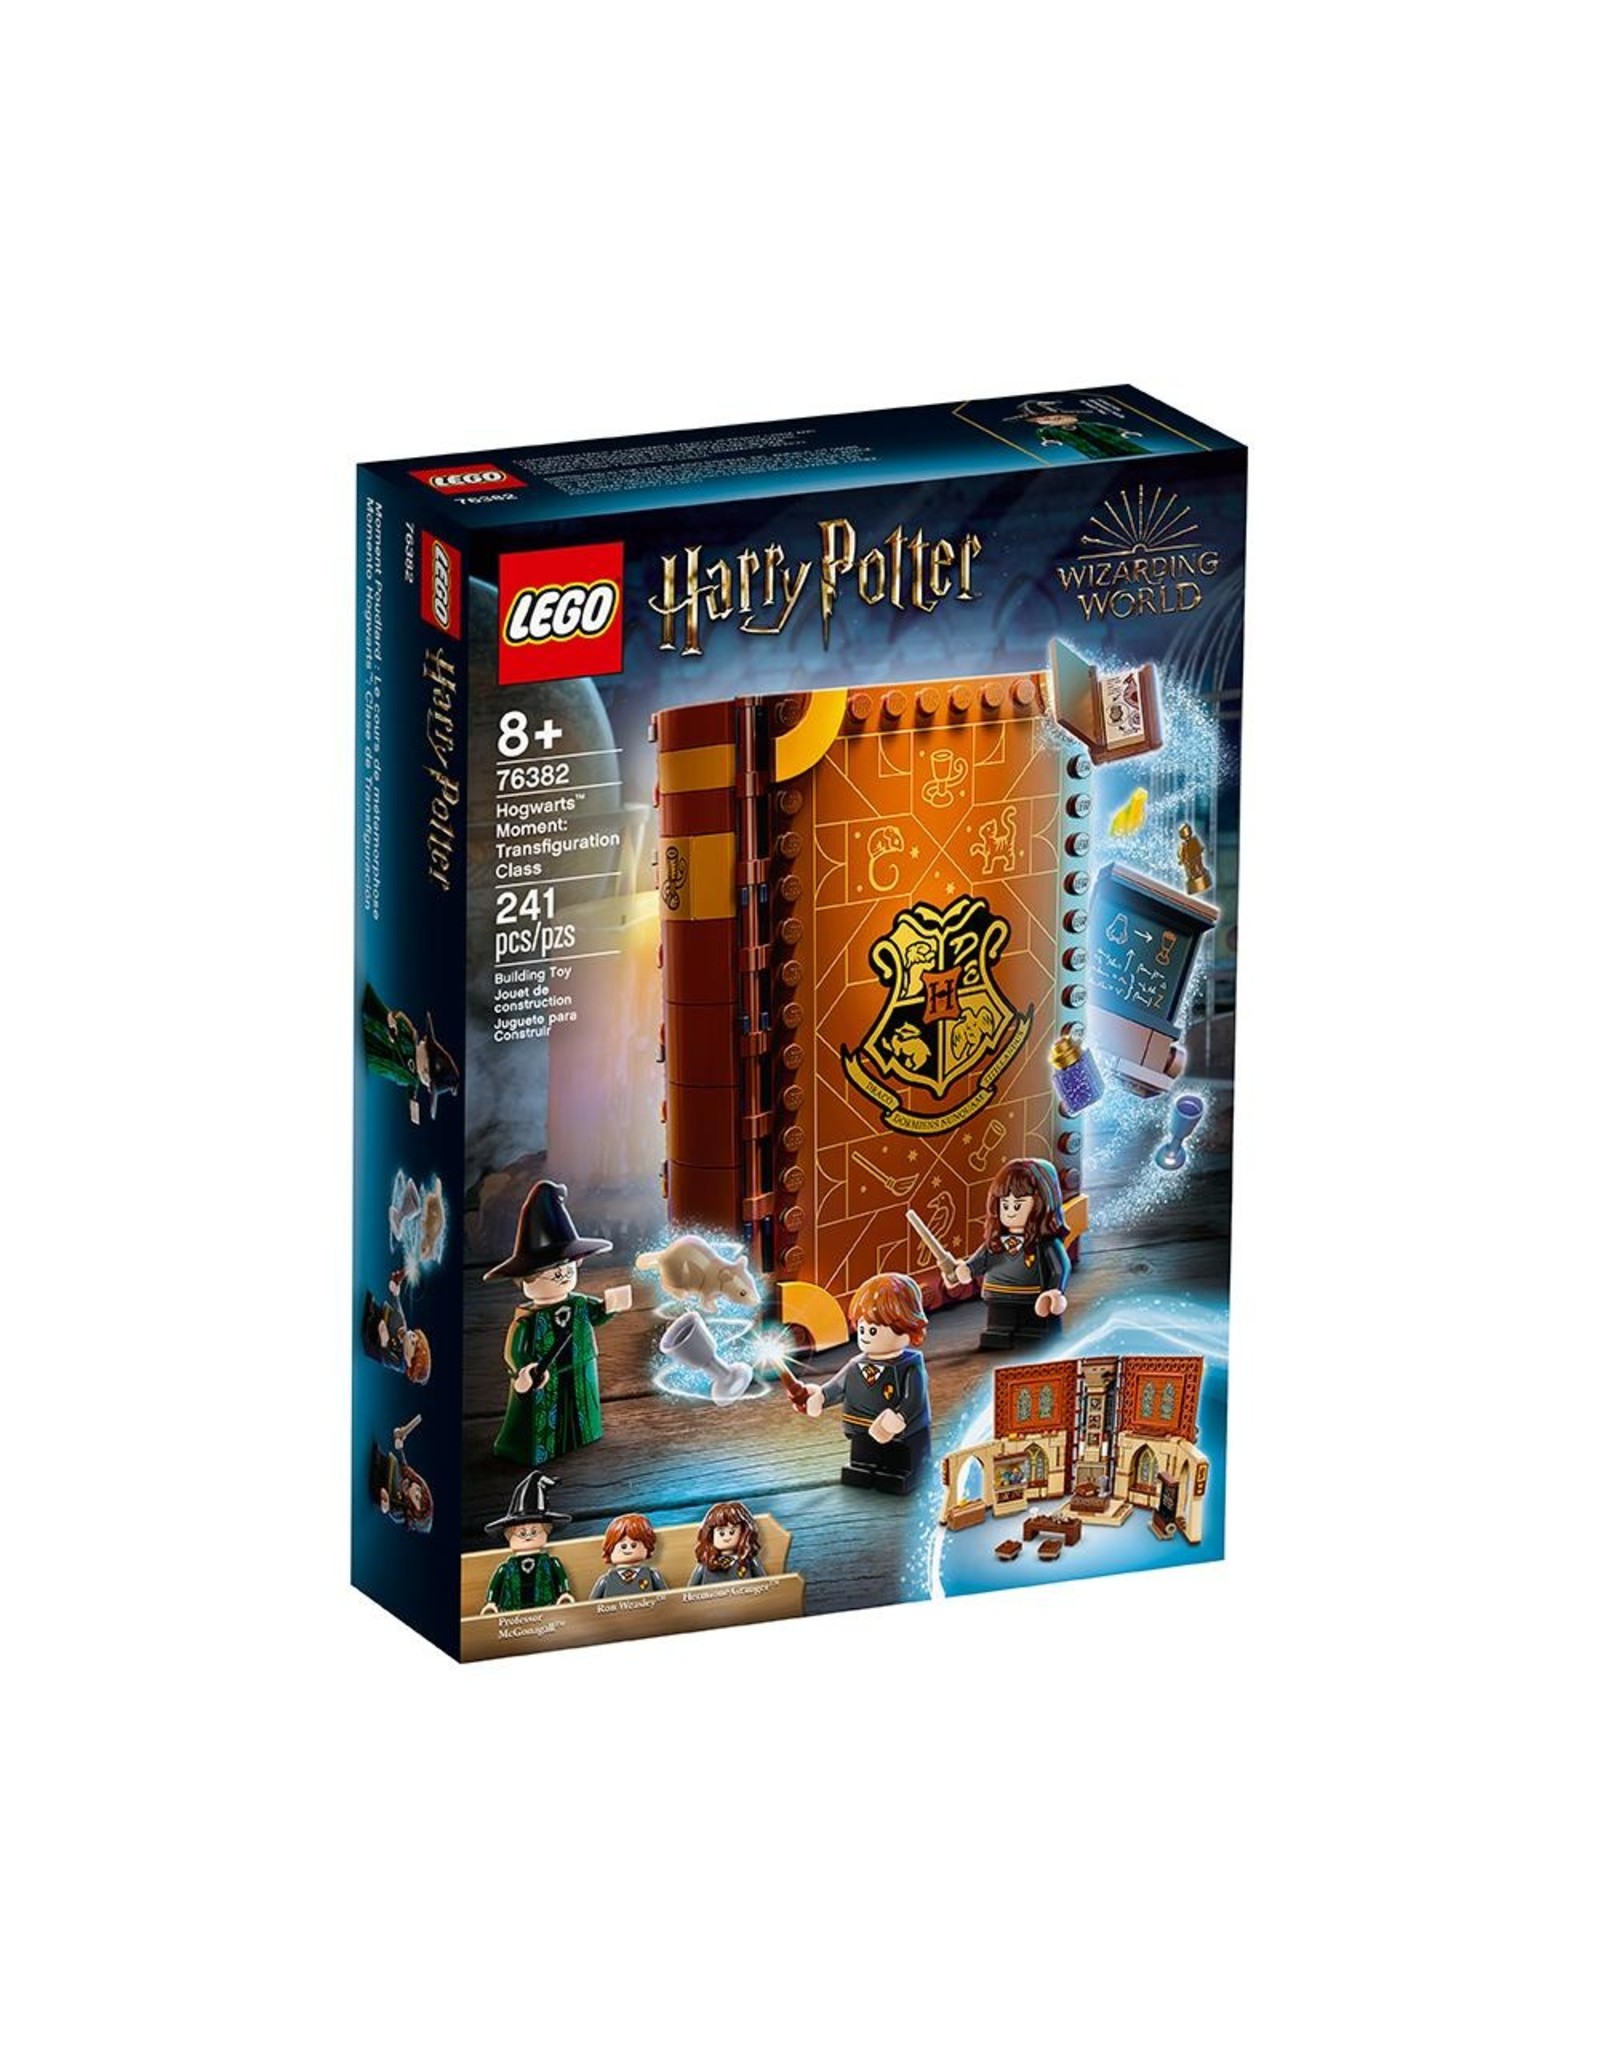 LEGO Harry Potter - 76382 Hogwarts Monent: Transfiguration Class